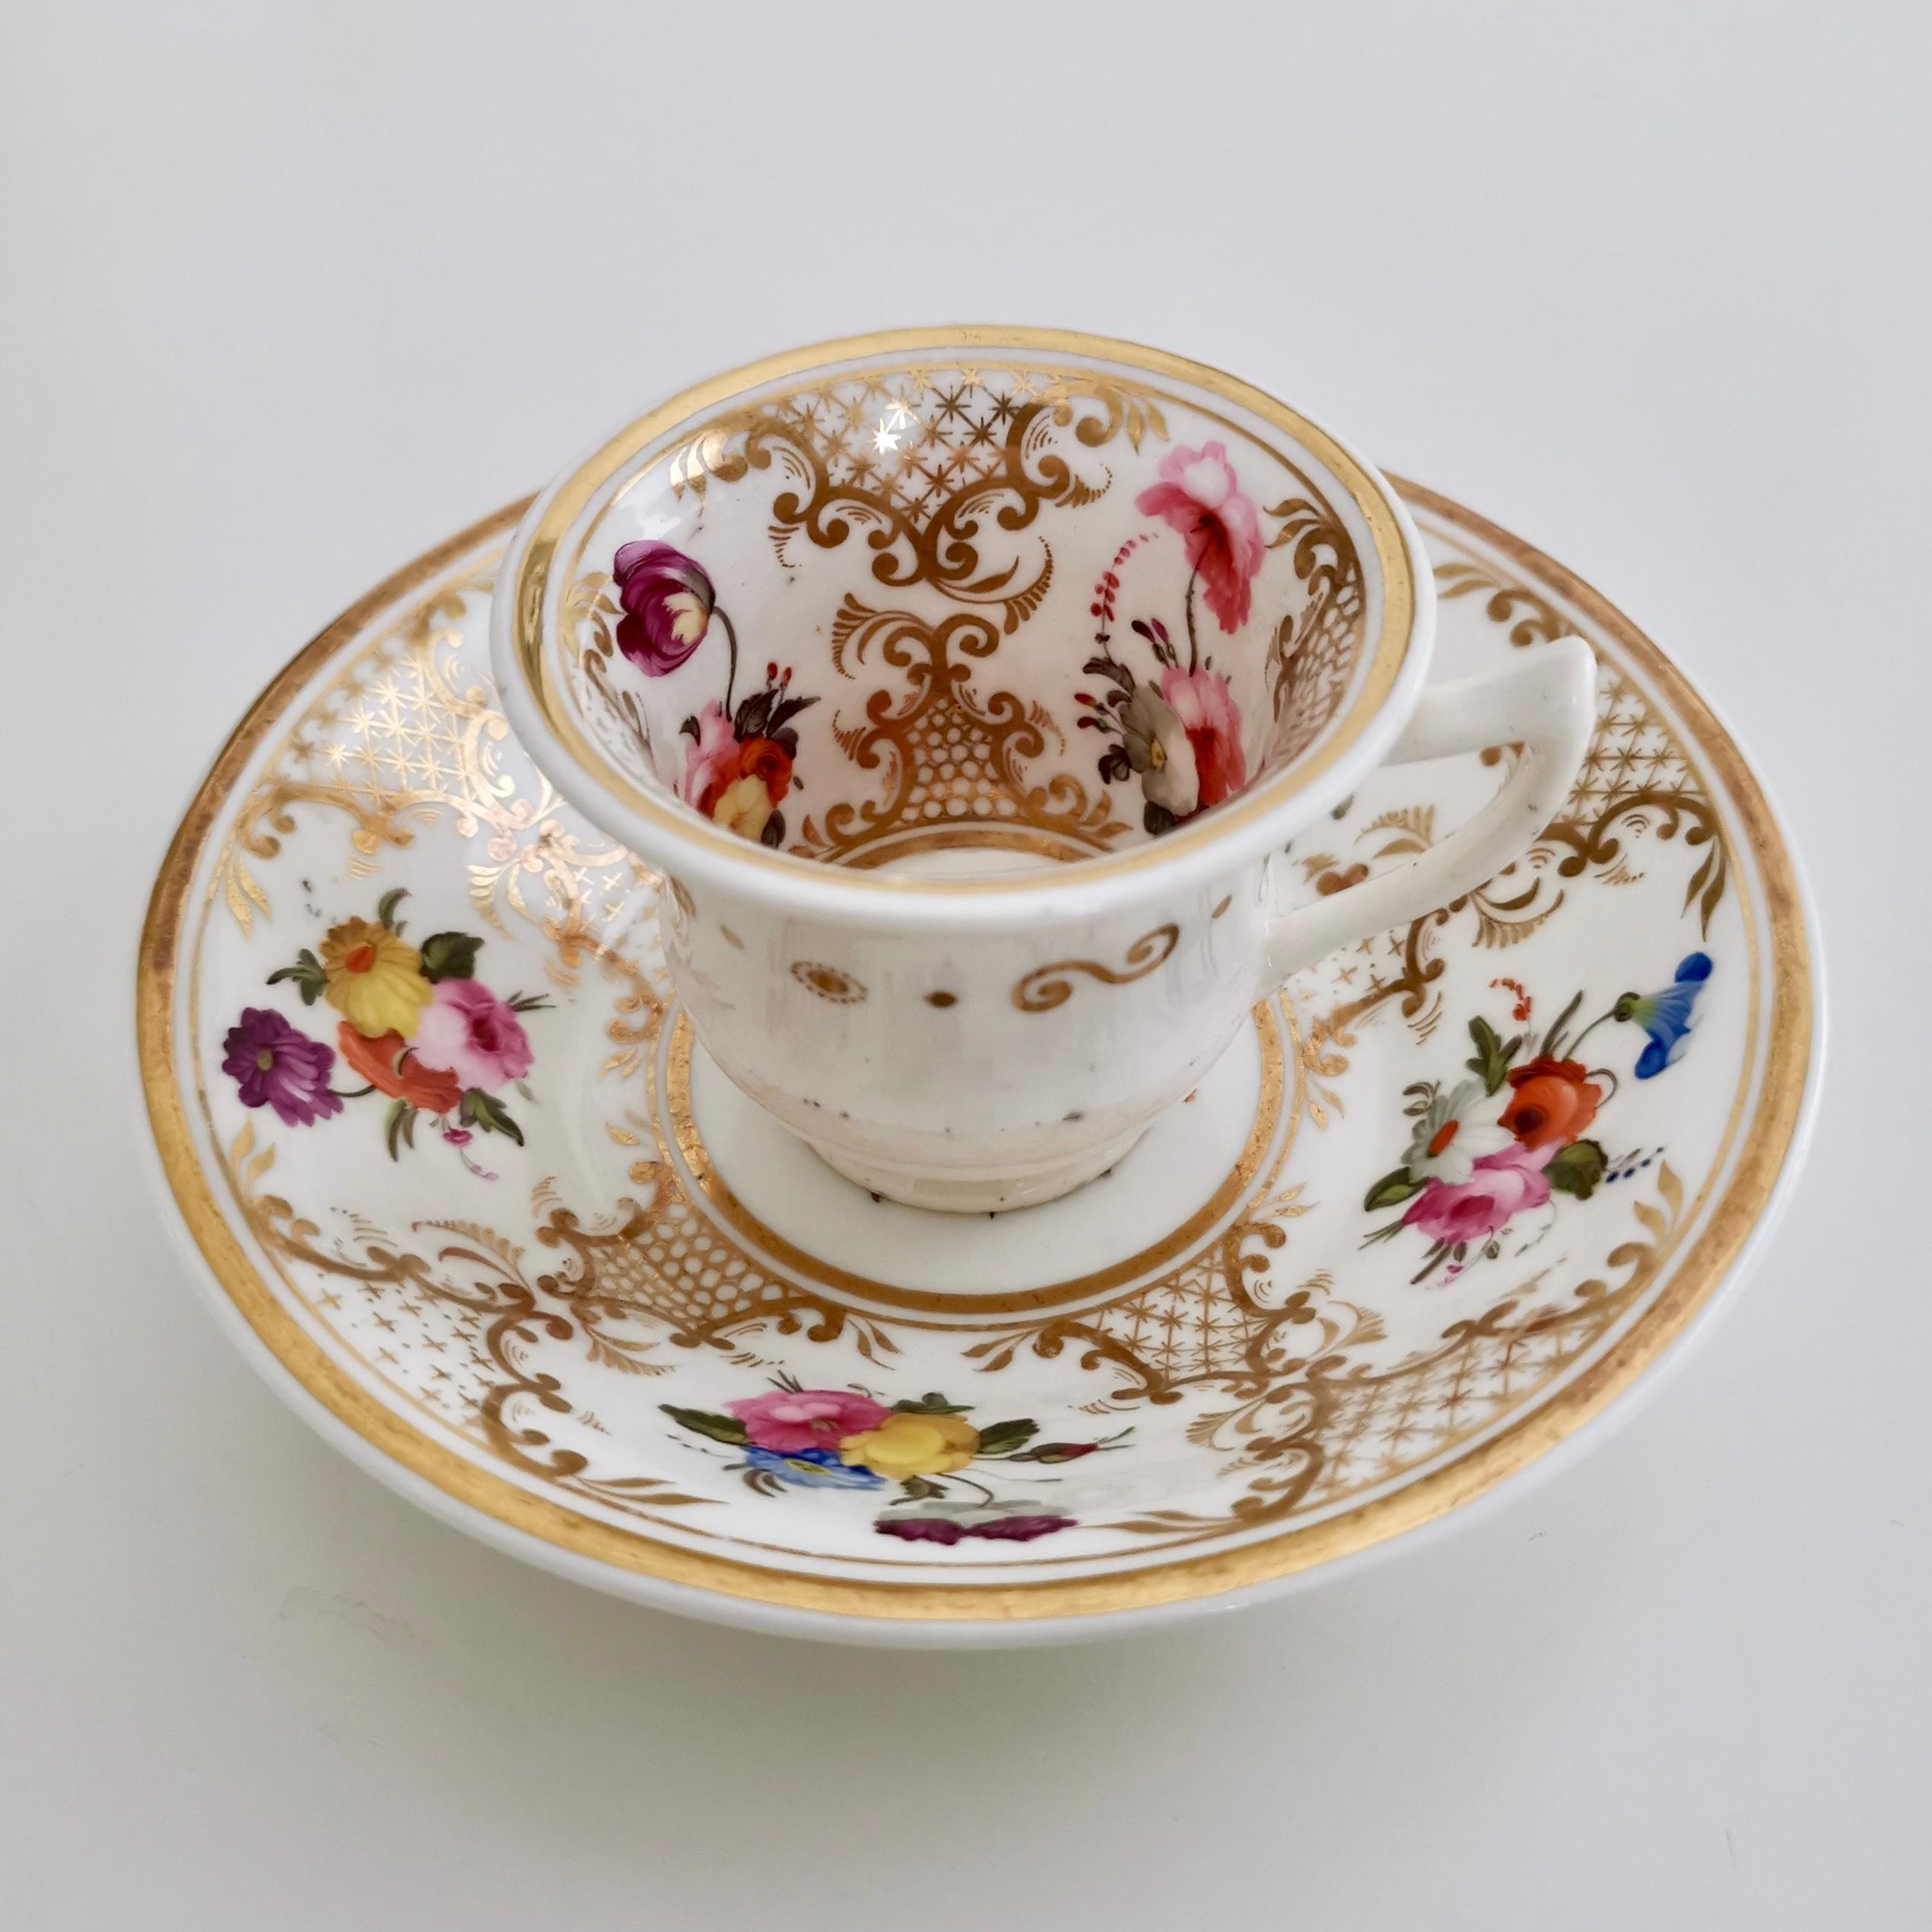 Rathbone Porcelain Teacup Trio, Hand Painted Flowers and Gilt, Regency ca 1820 (Handbemalt)